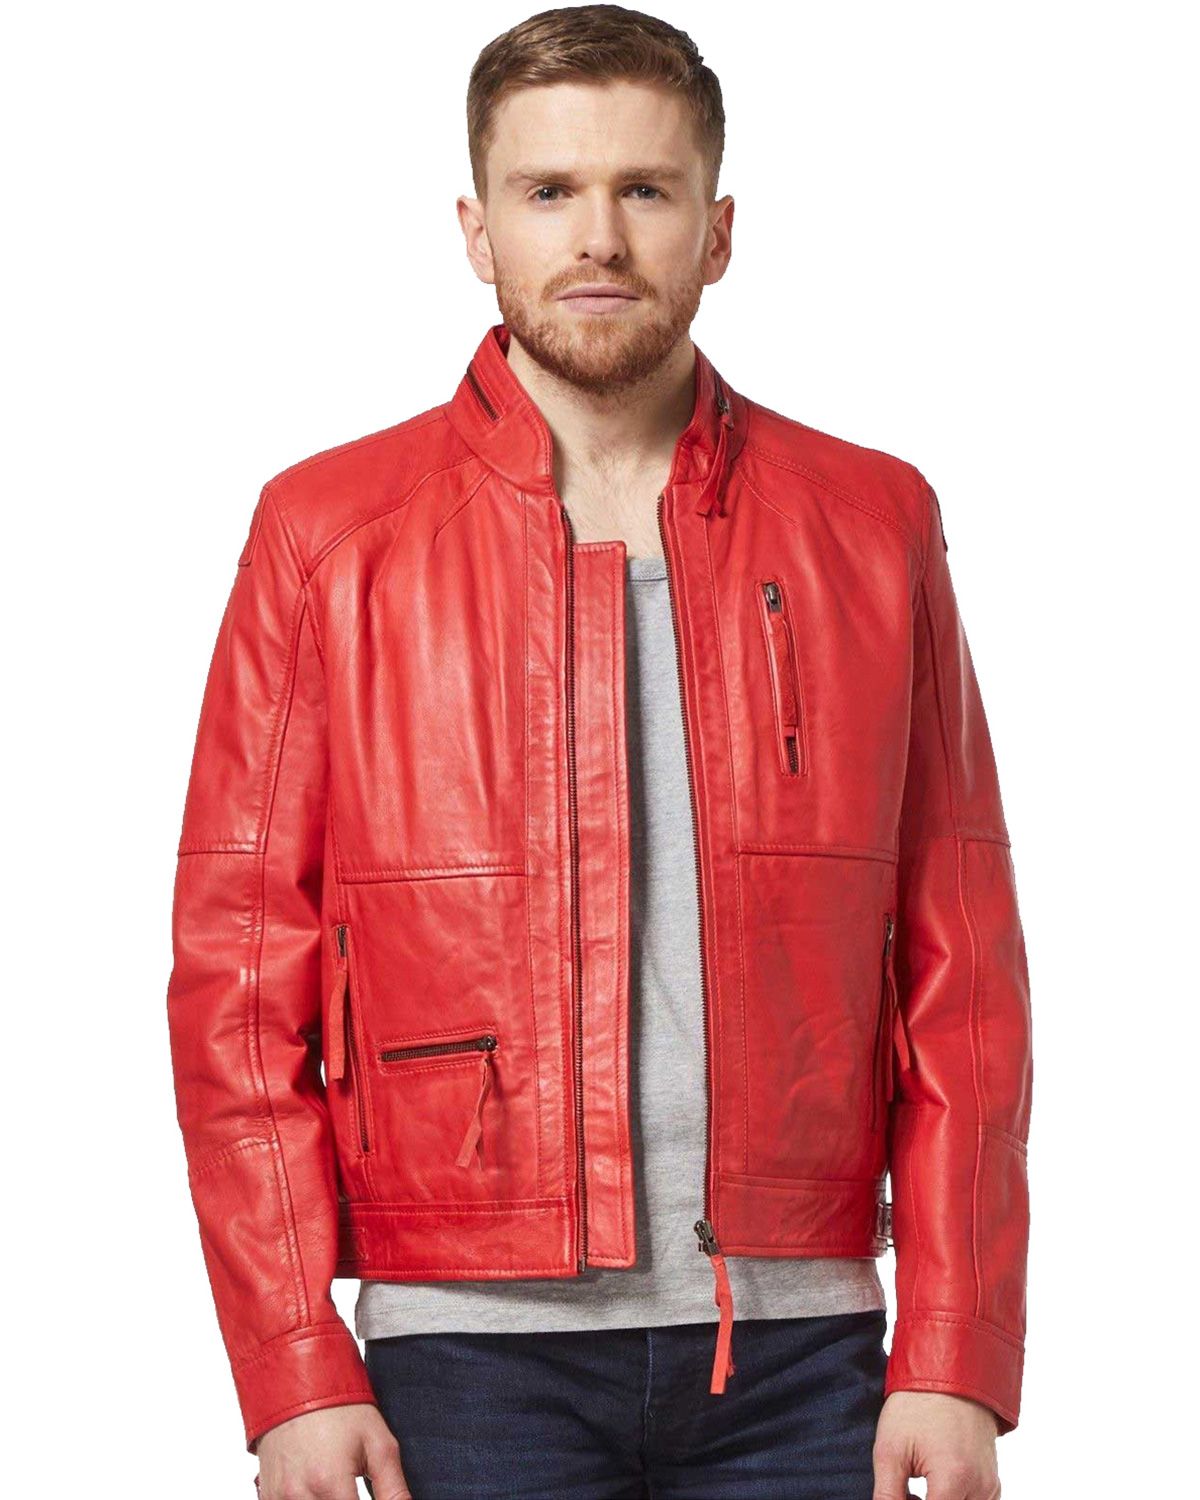 Shop Premium Red Leather Jackets for Men & Women - SCIN